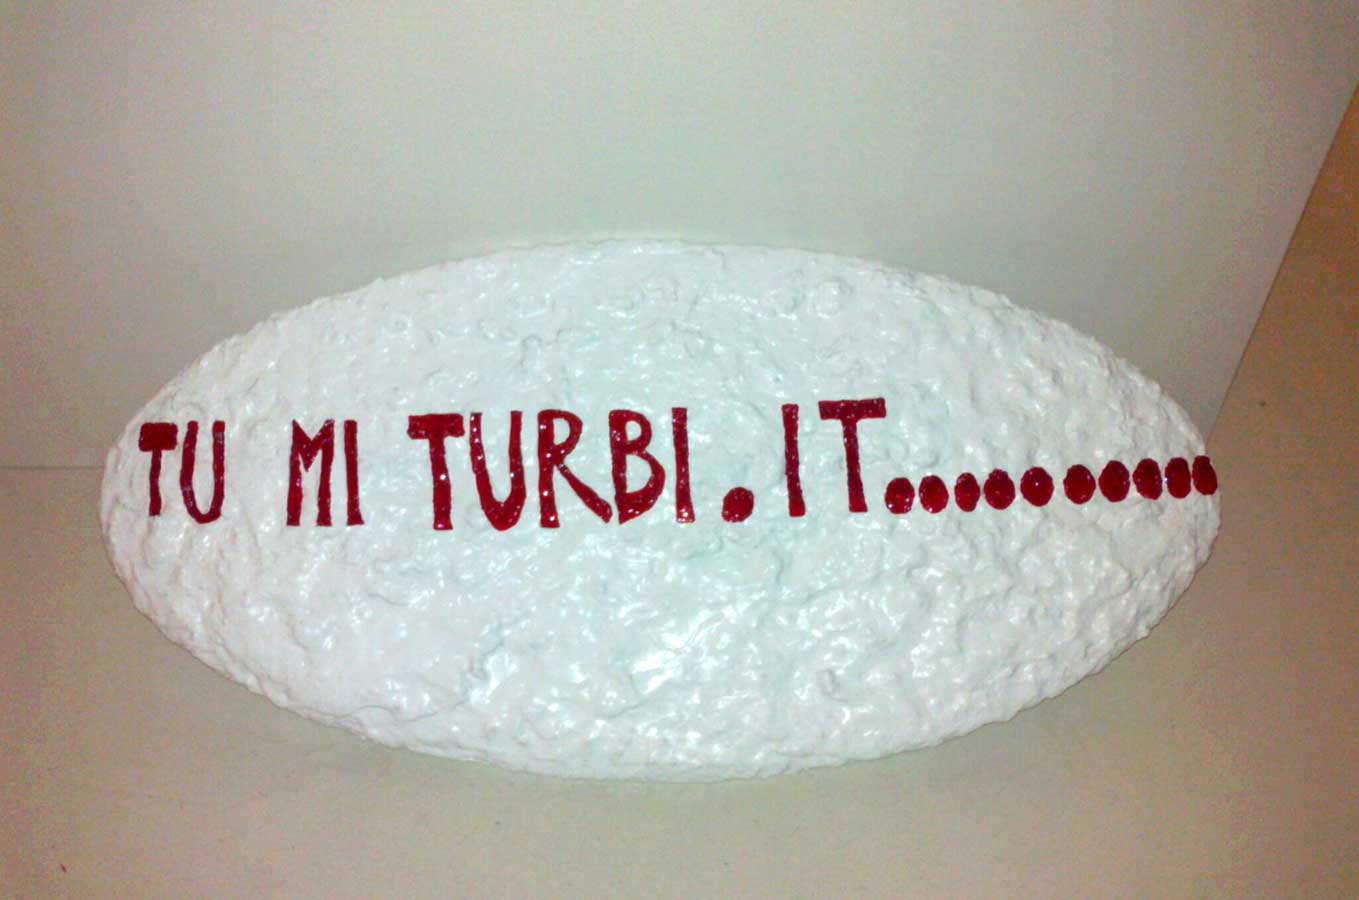 Tu mi turbi.it, sculpture by Nicola Guerraz, acrylic on resin, 67 x 33 cm, 2011